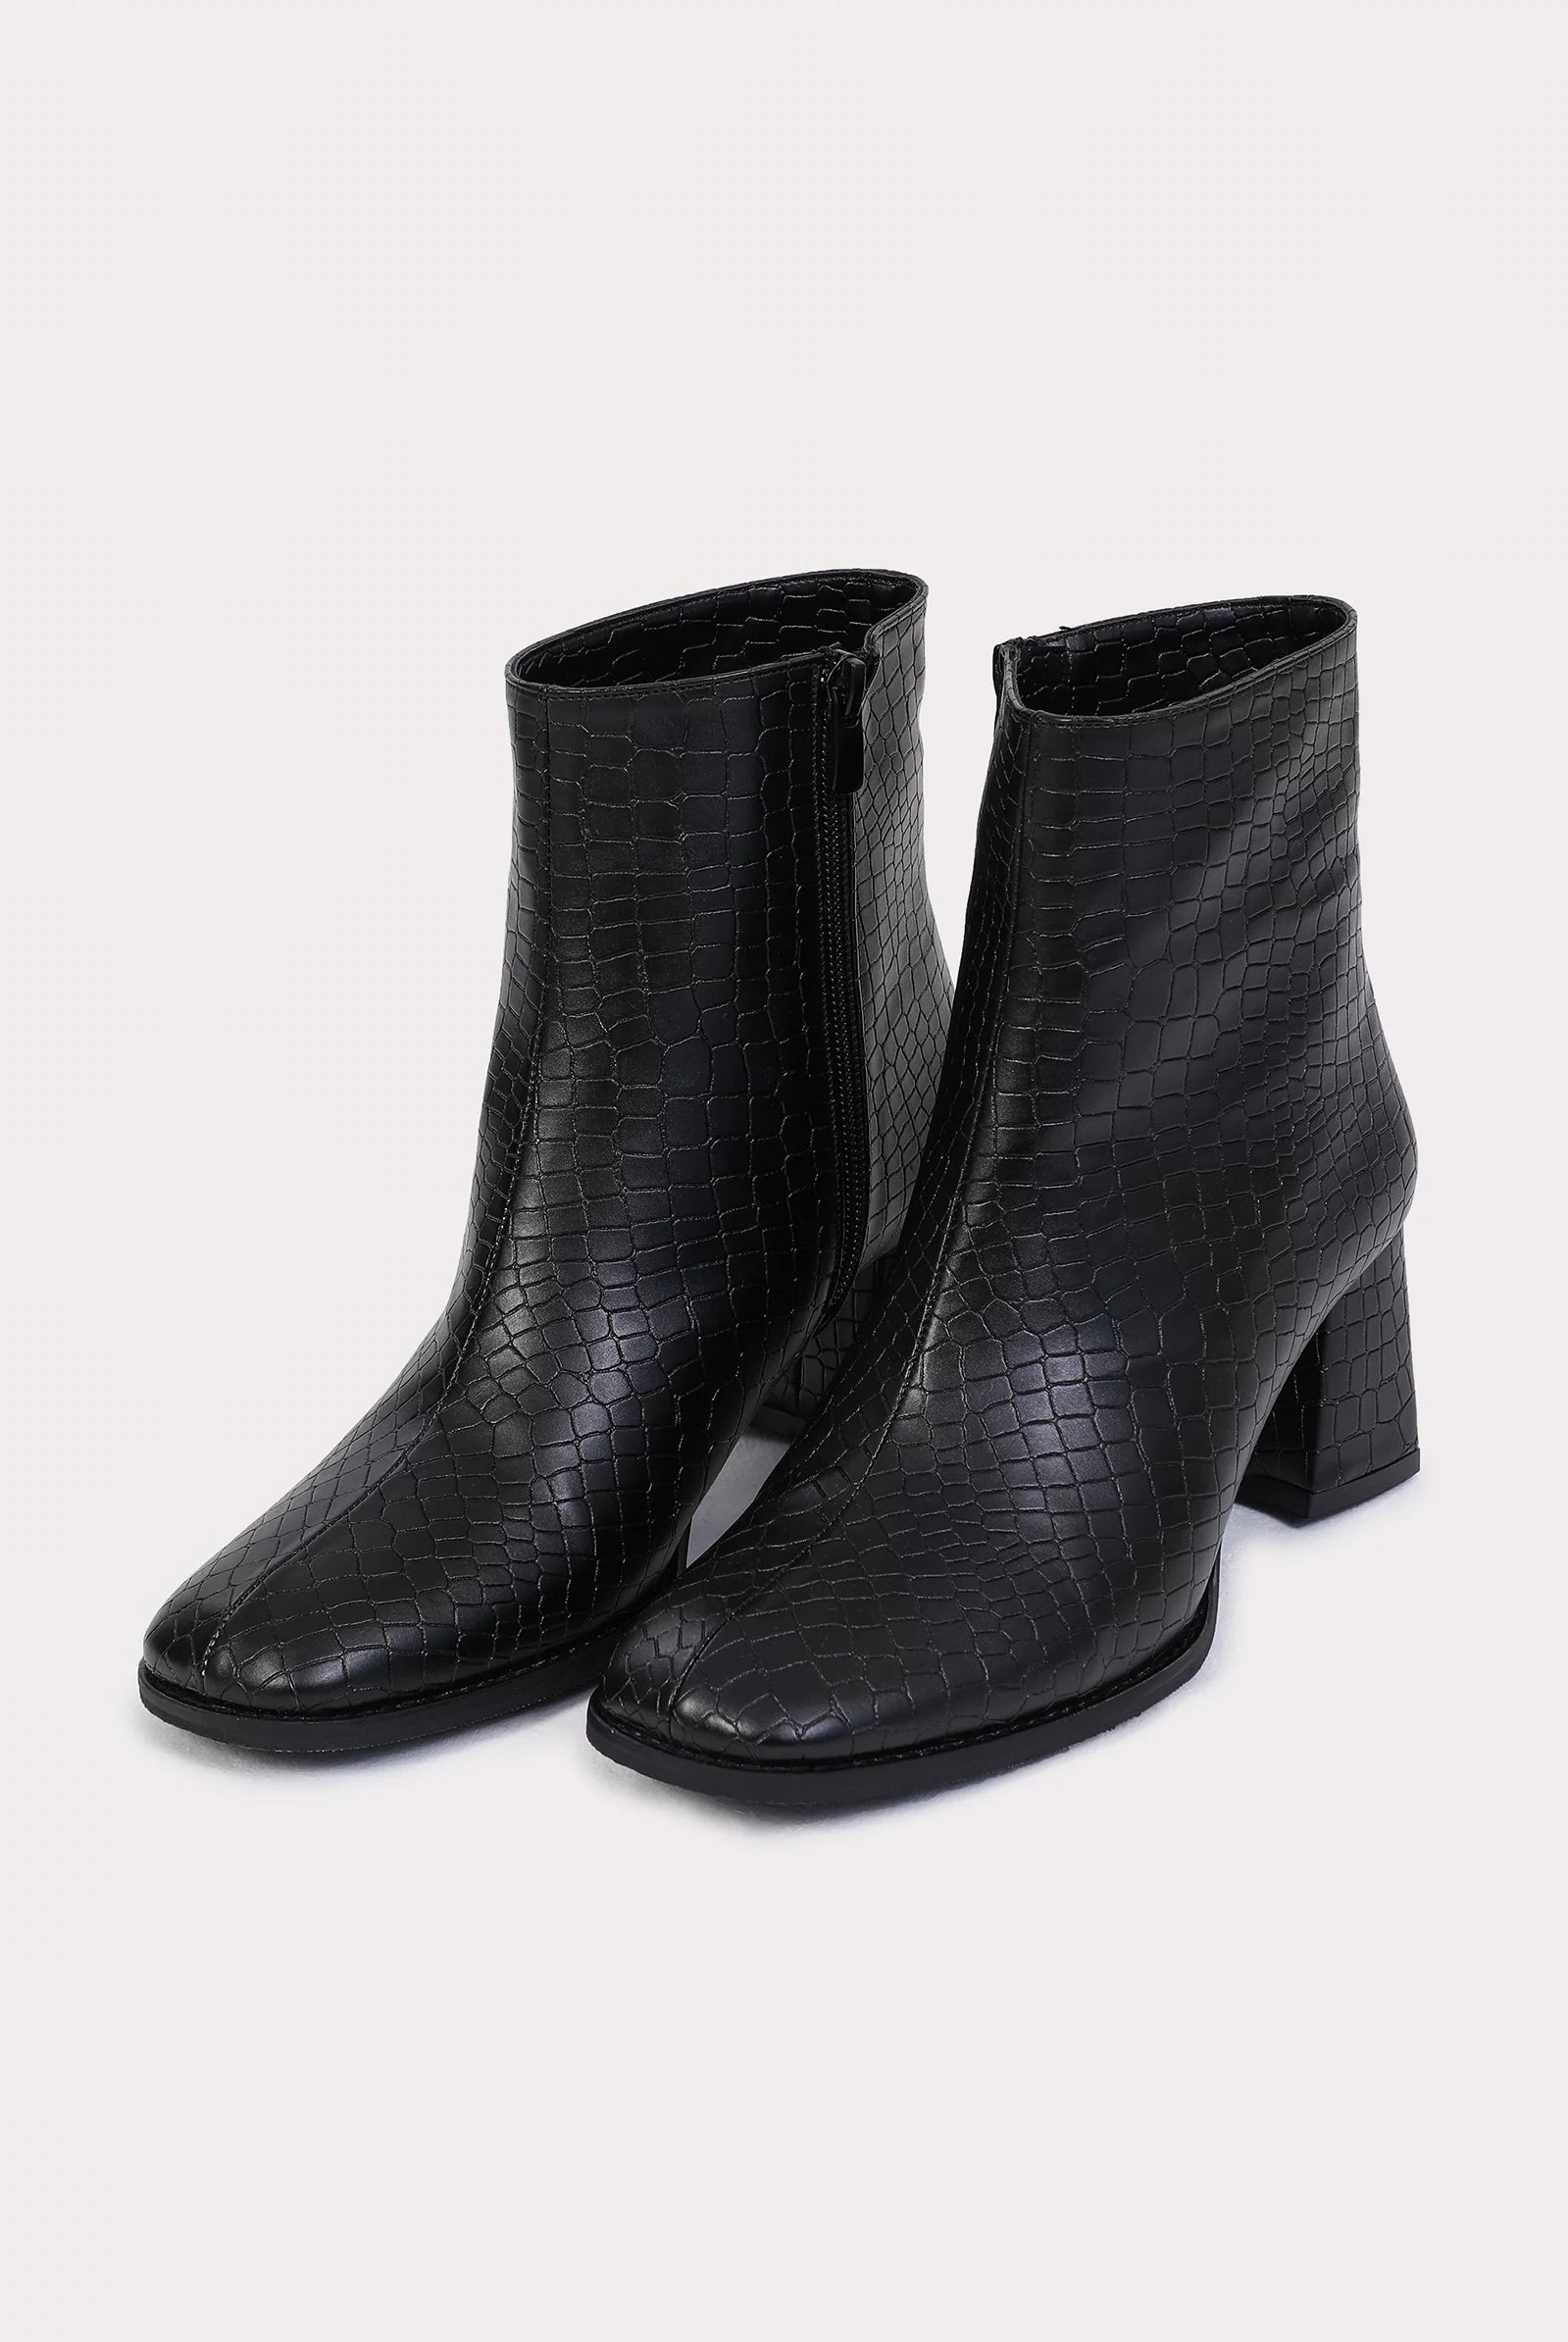 Black croc boots for women